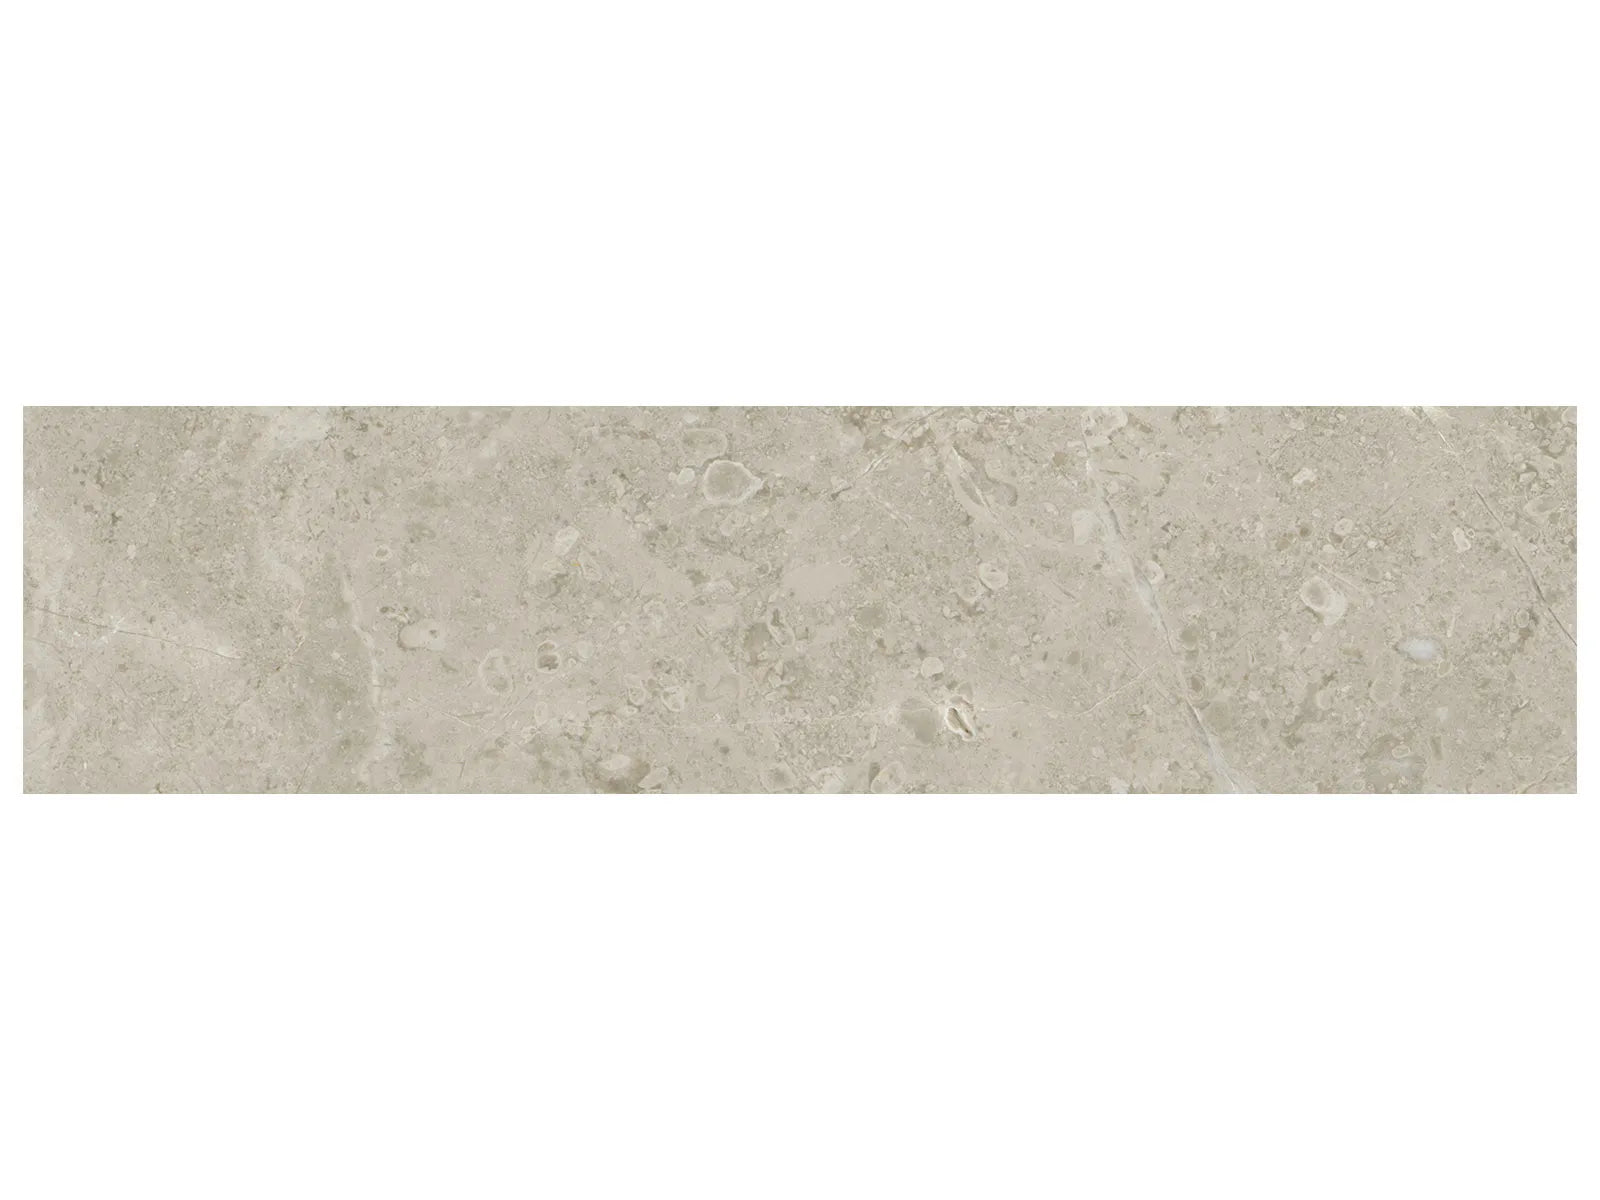 RITZ GRAY: Marble Field Tile (12¹⁄₁₆"X2¹⁵⁄₁₆"X⅜" | Honed)